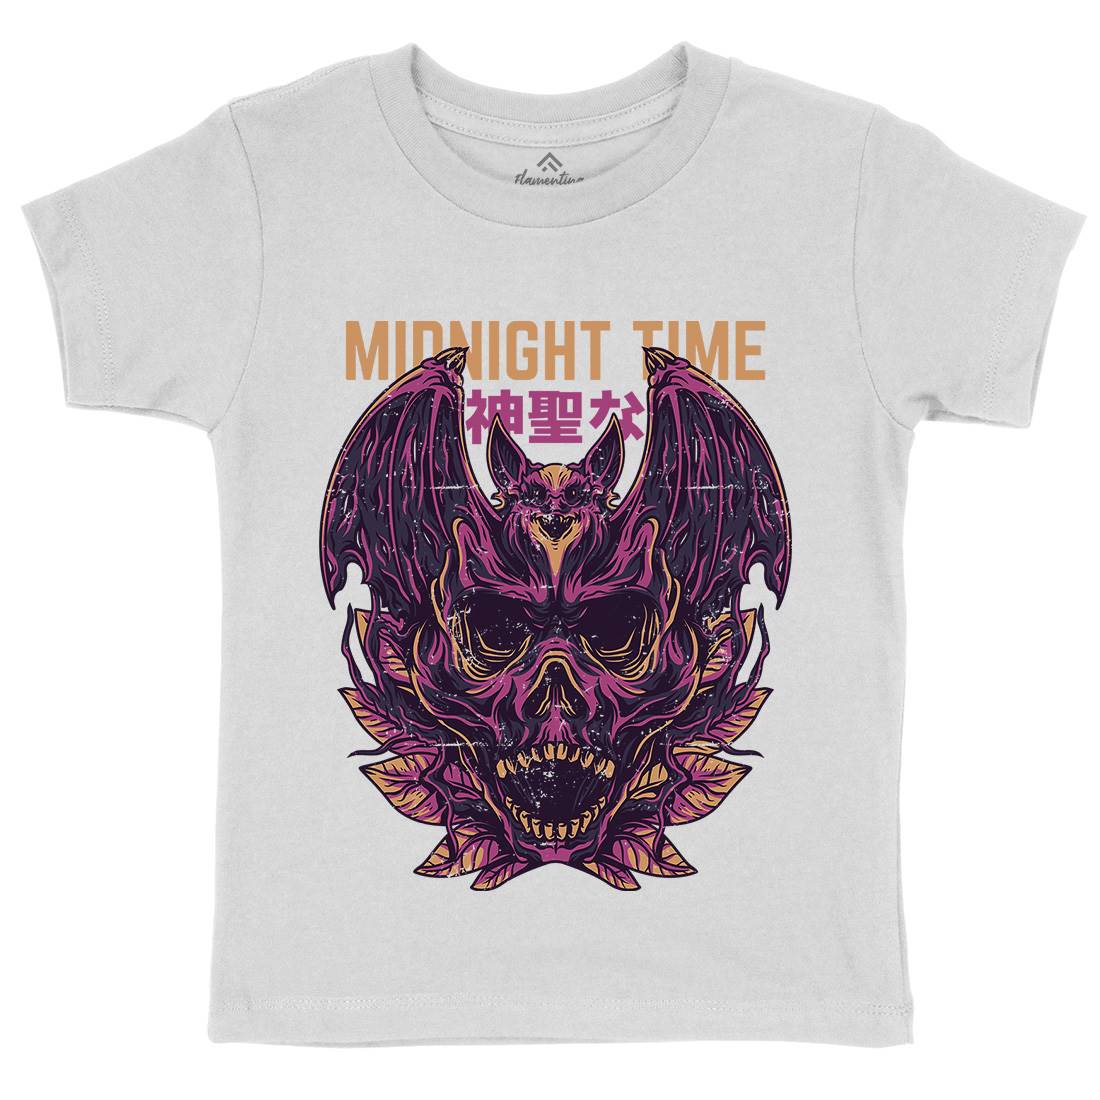 Midnight Time Kids Crew Neck T-Shirt Horror D652